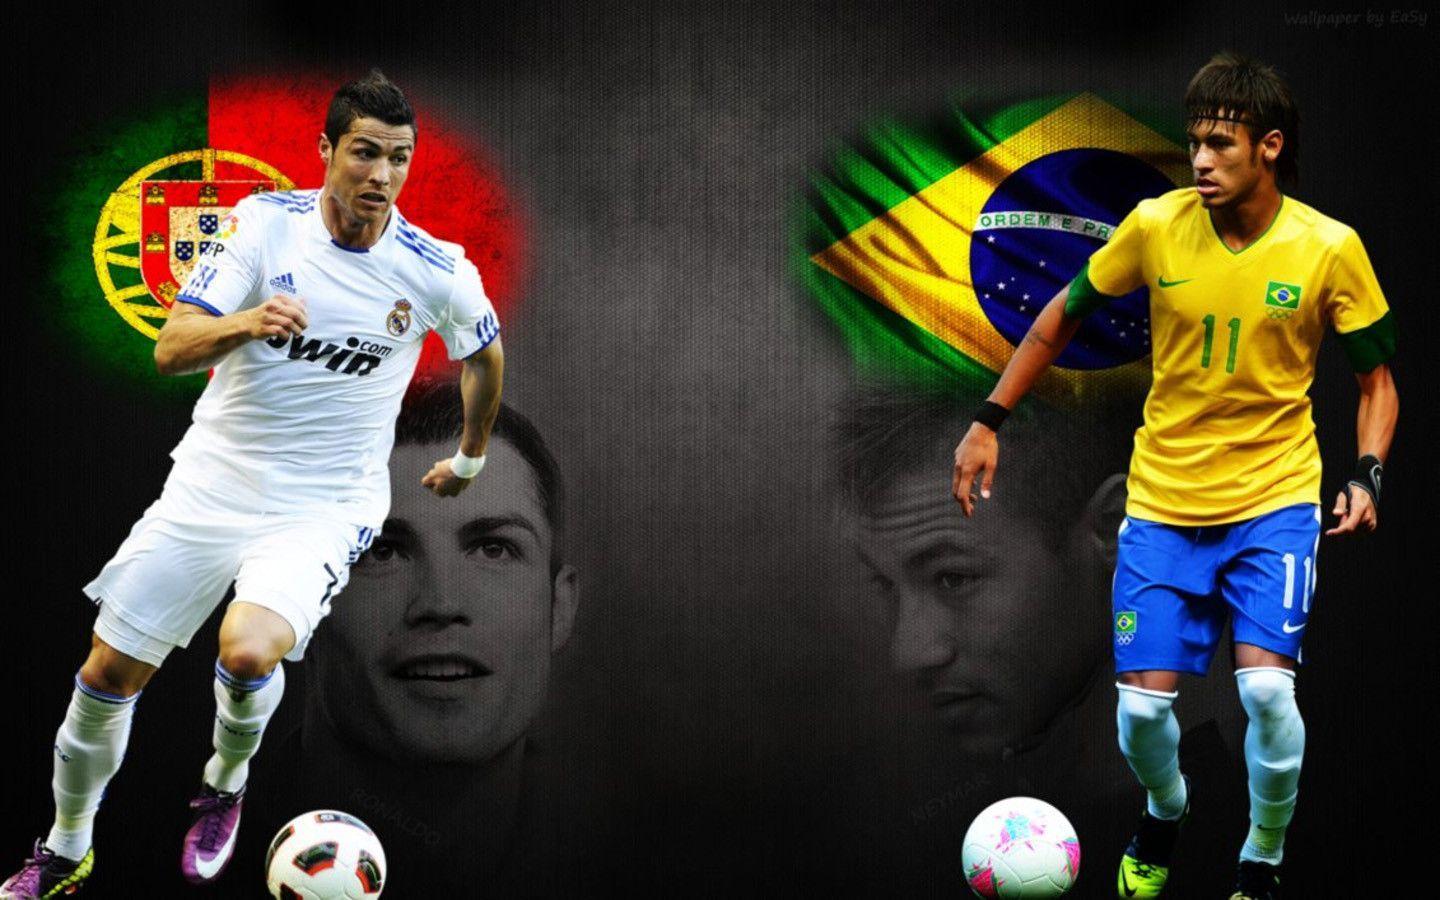 Ronaldo PES 2015 Vs FIFA 15 Game Wallpaper Bes Wallpaper